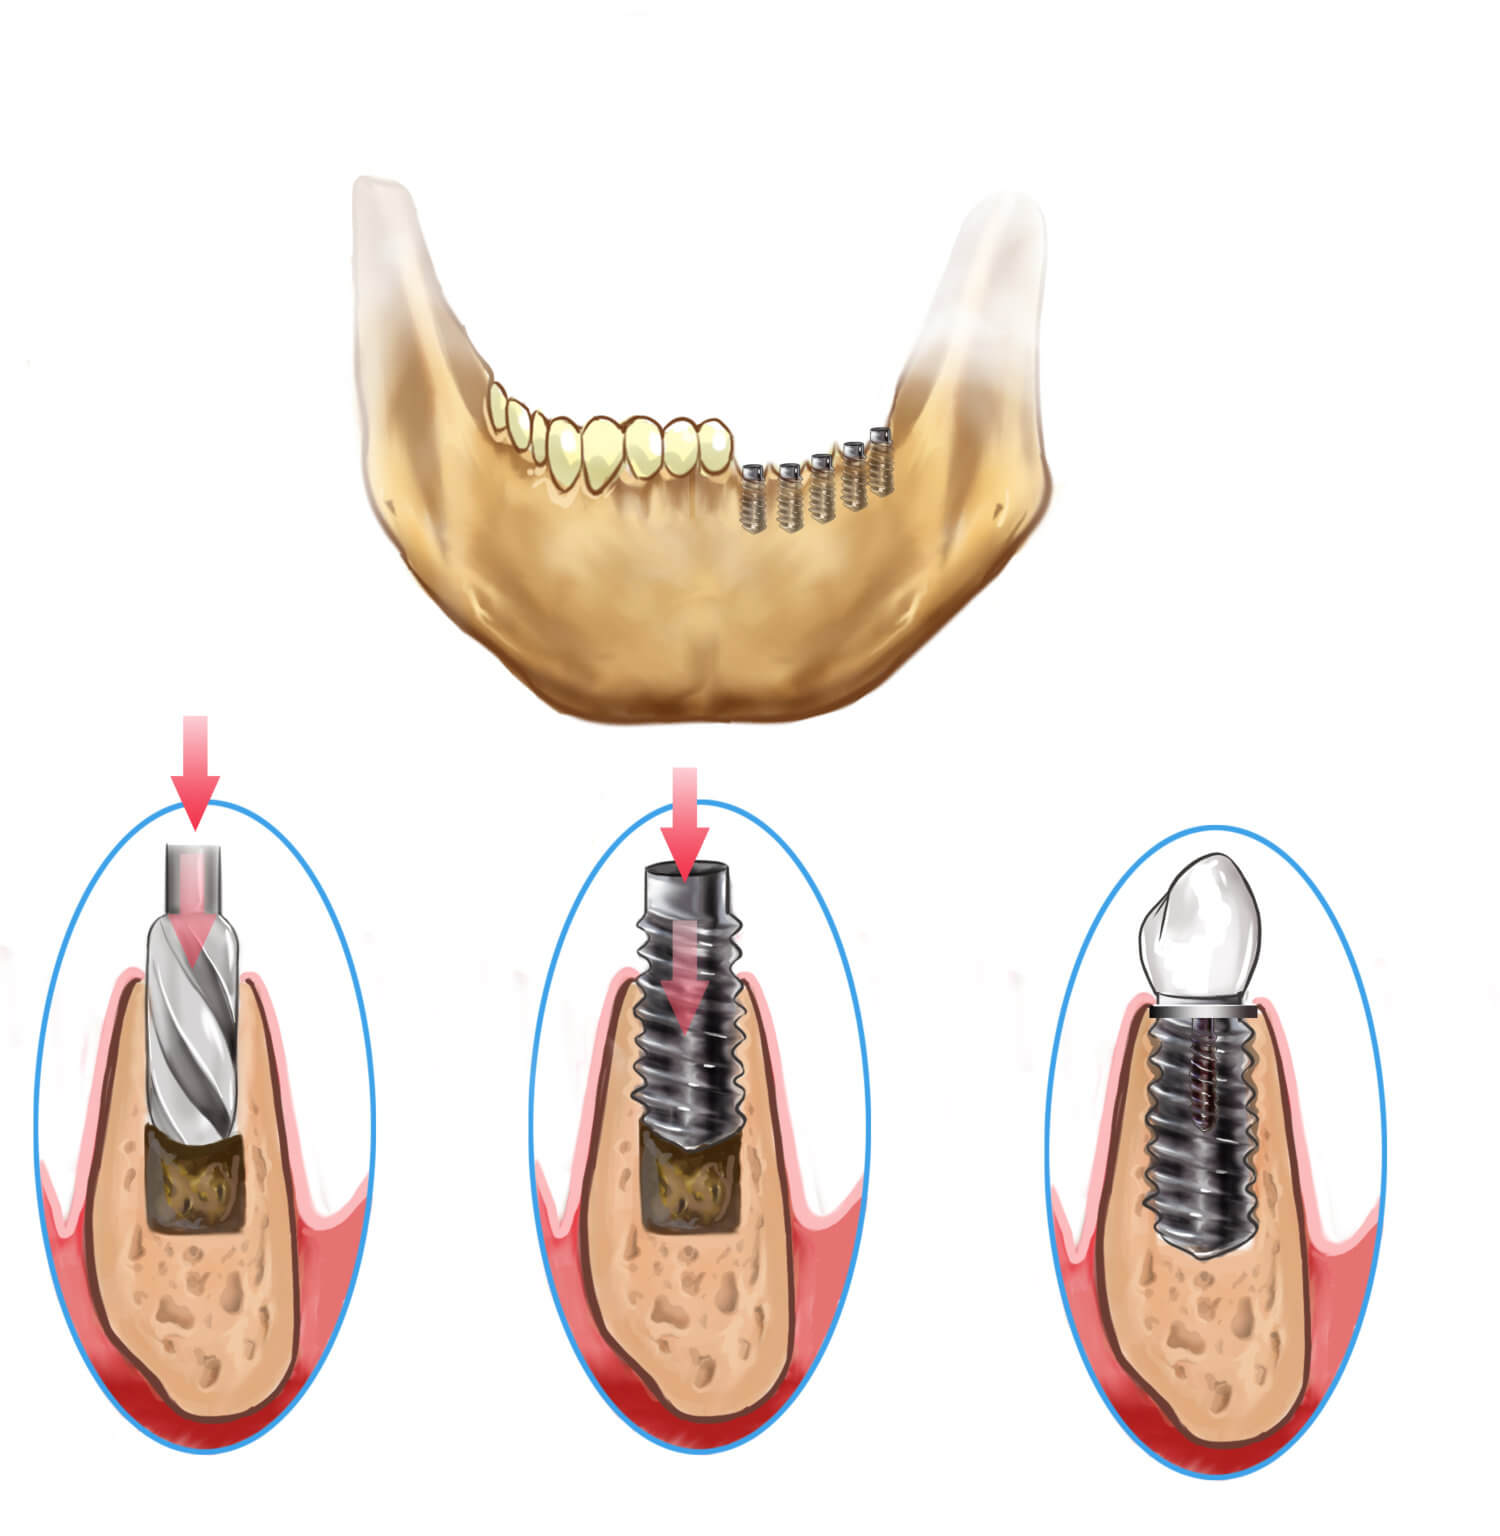 Downtown dental, implants